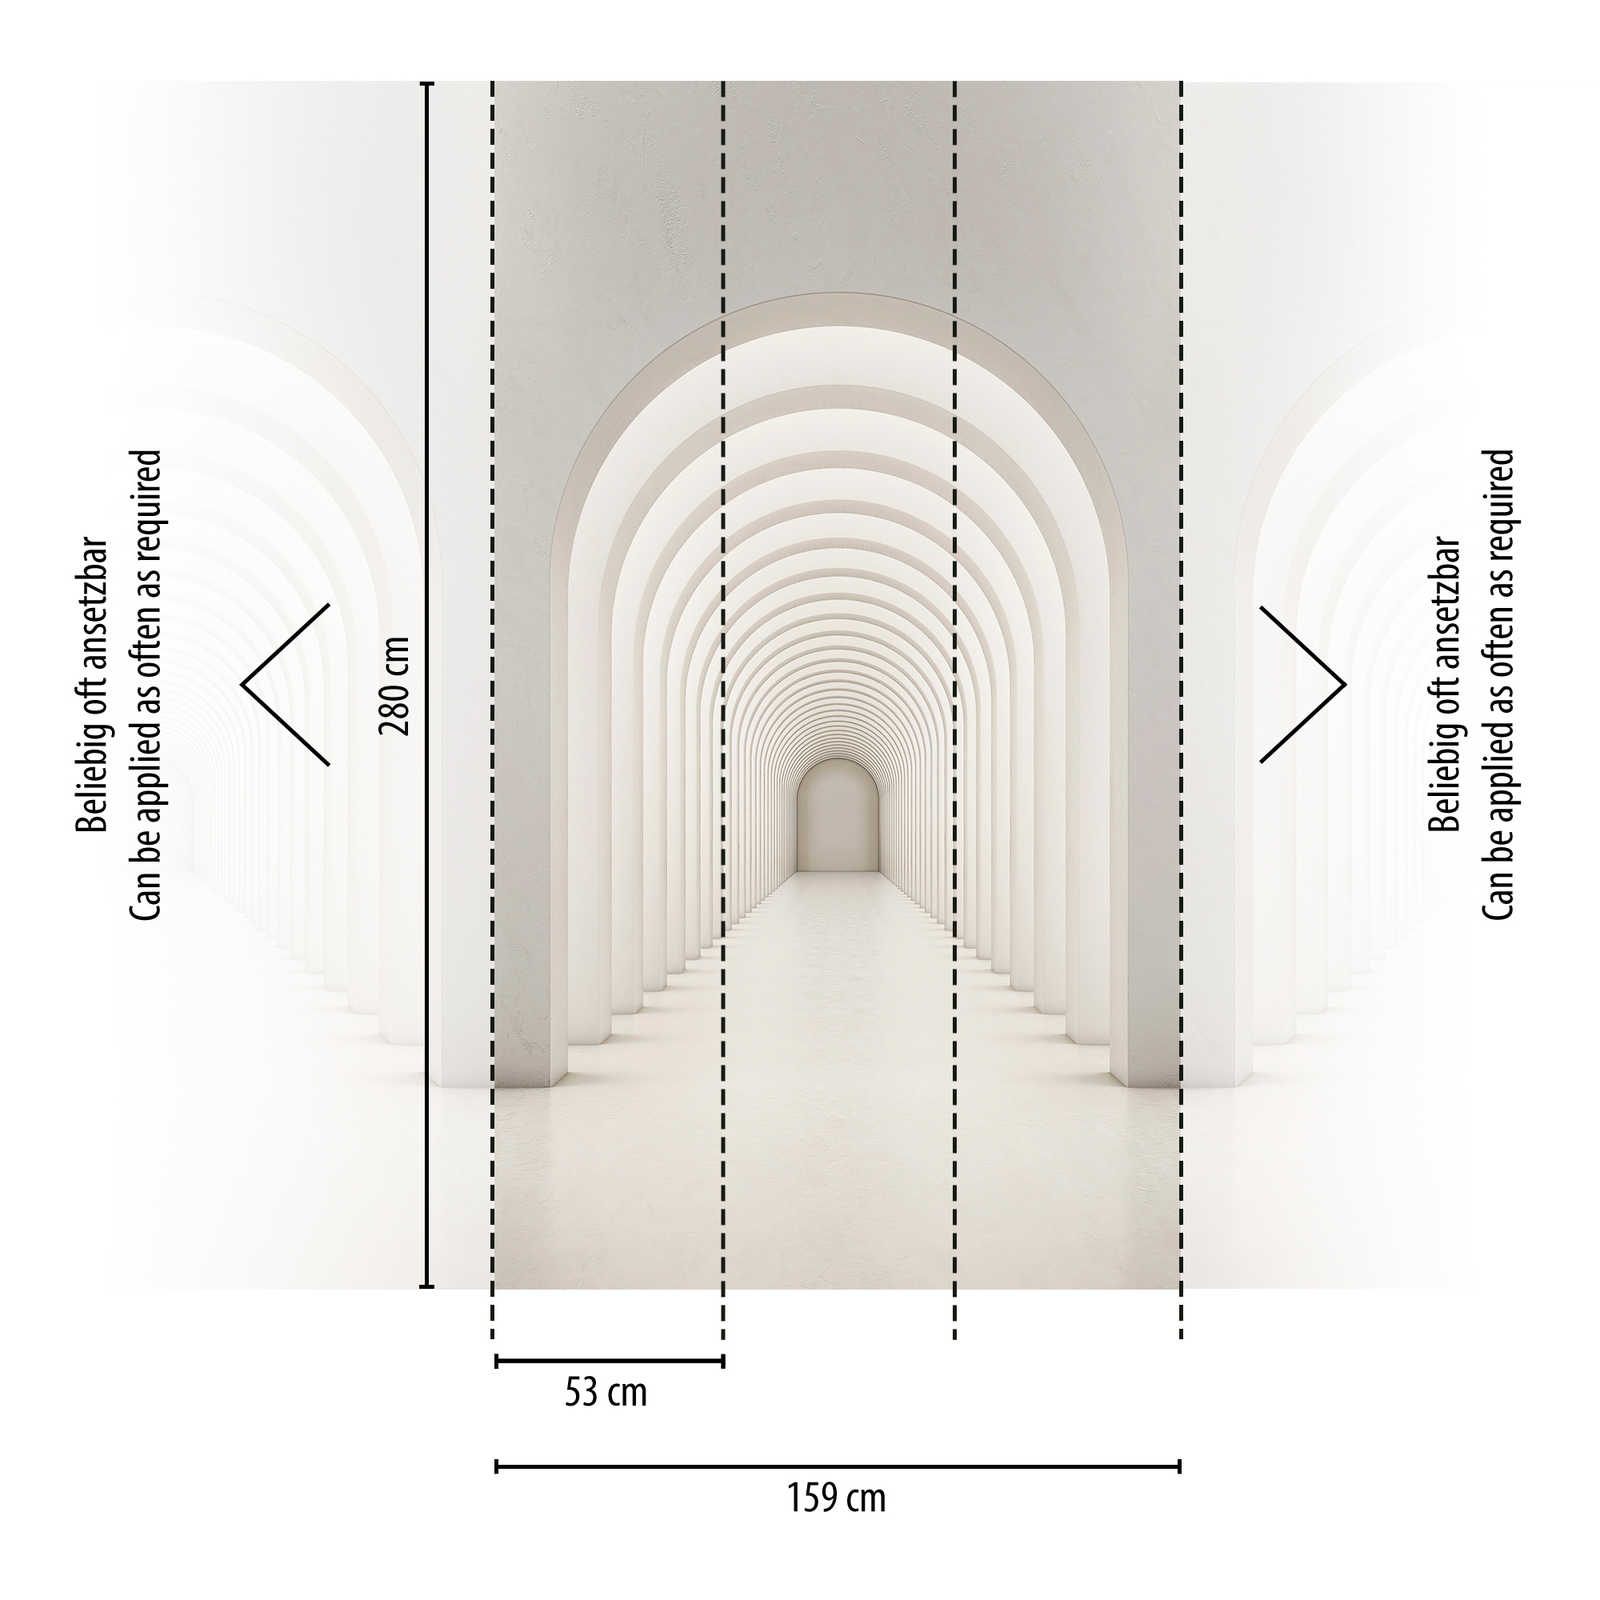             Carta da parati novità - Carta da parati motivo 3D arco rotondo architettura moderna
        